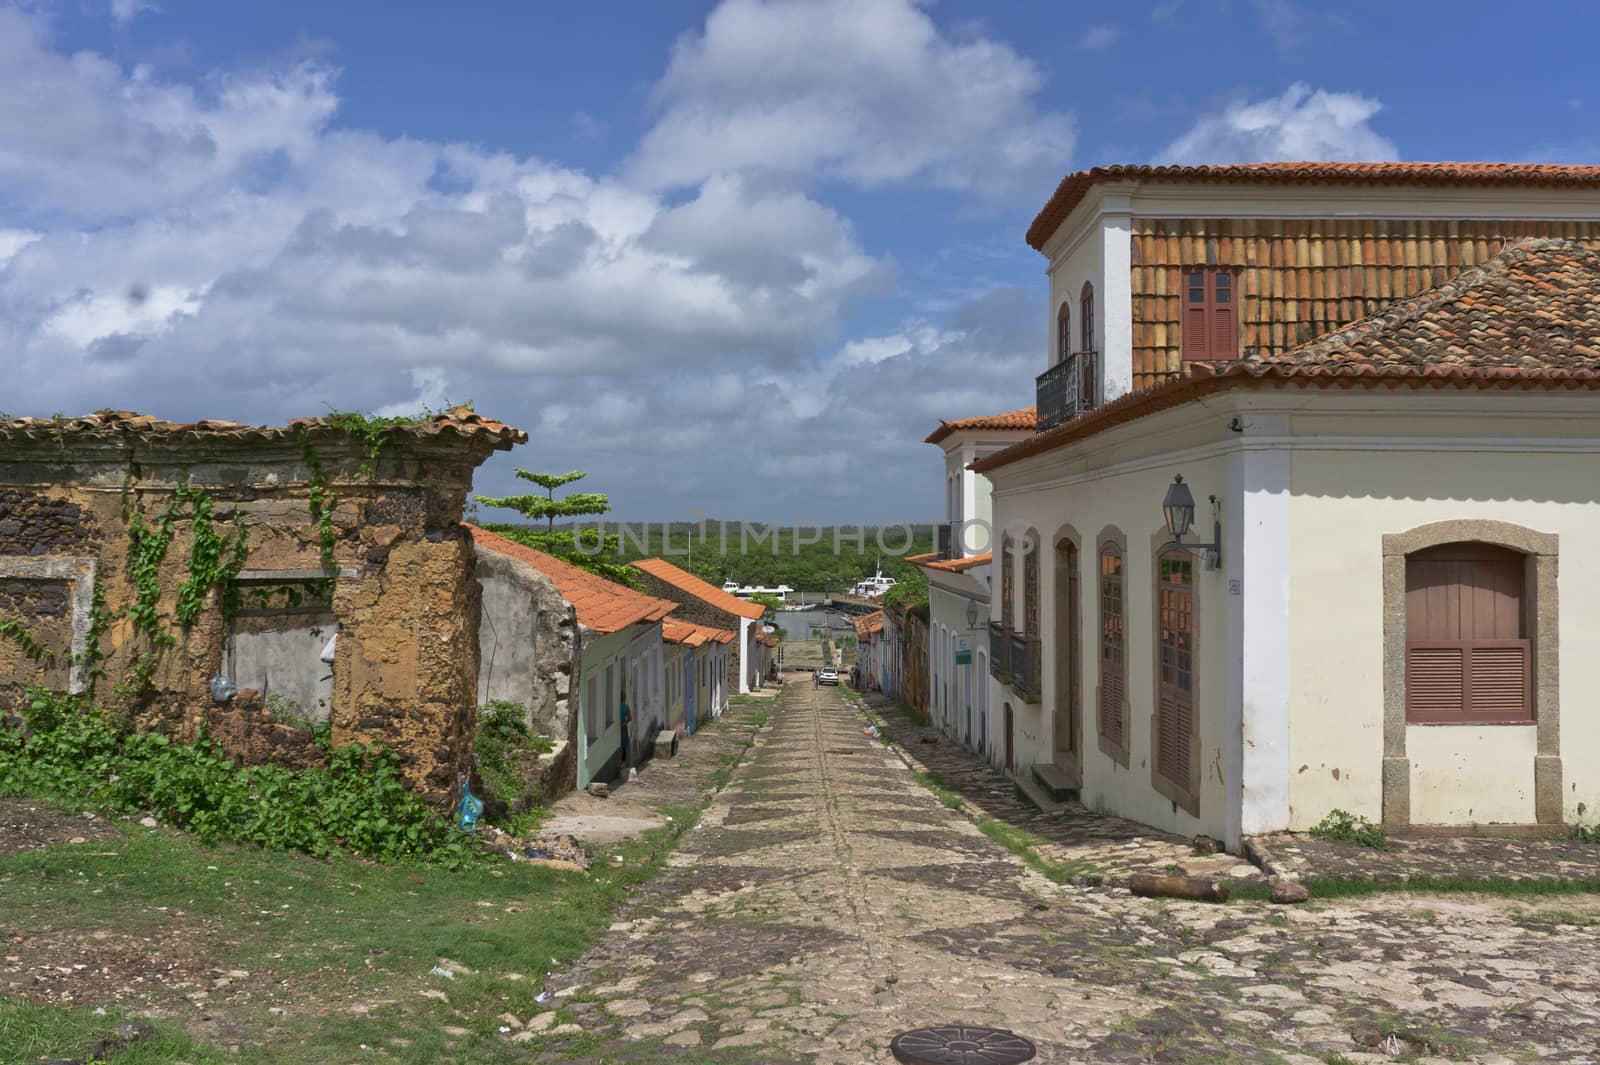 Alcantara, Brazil, South America by giannakisphoto